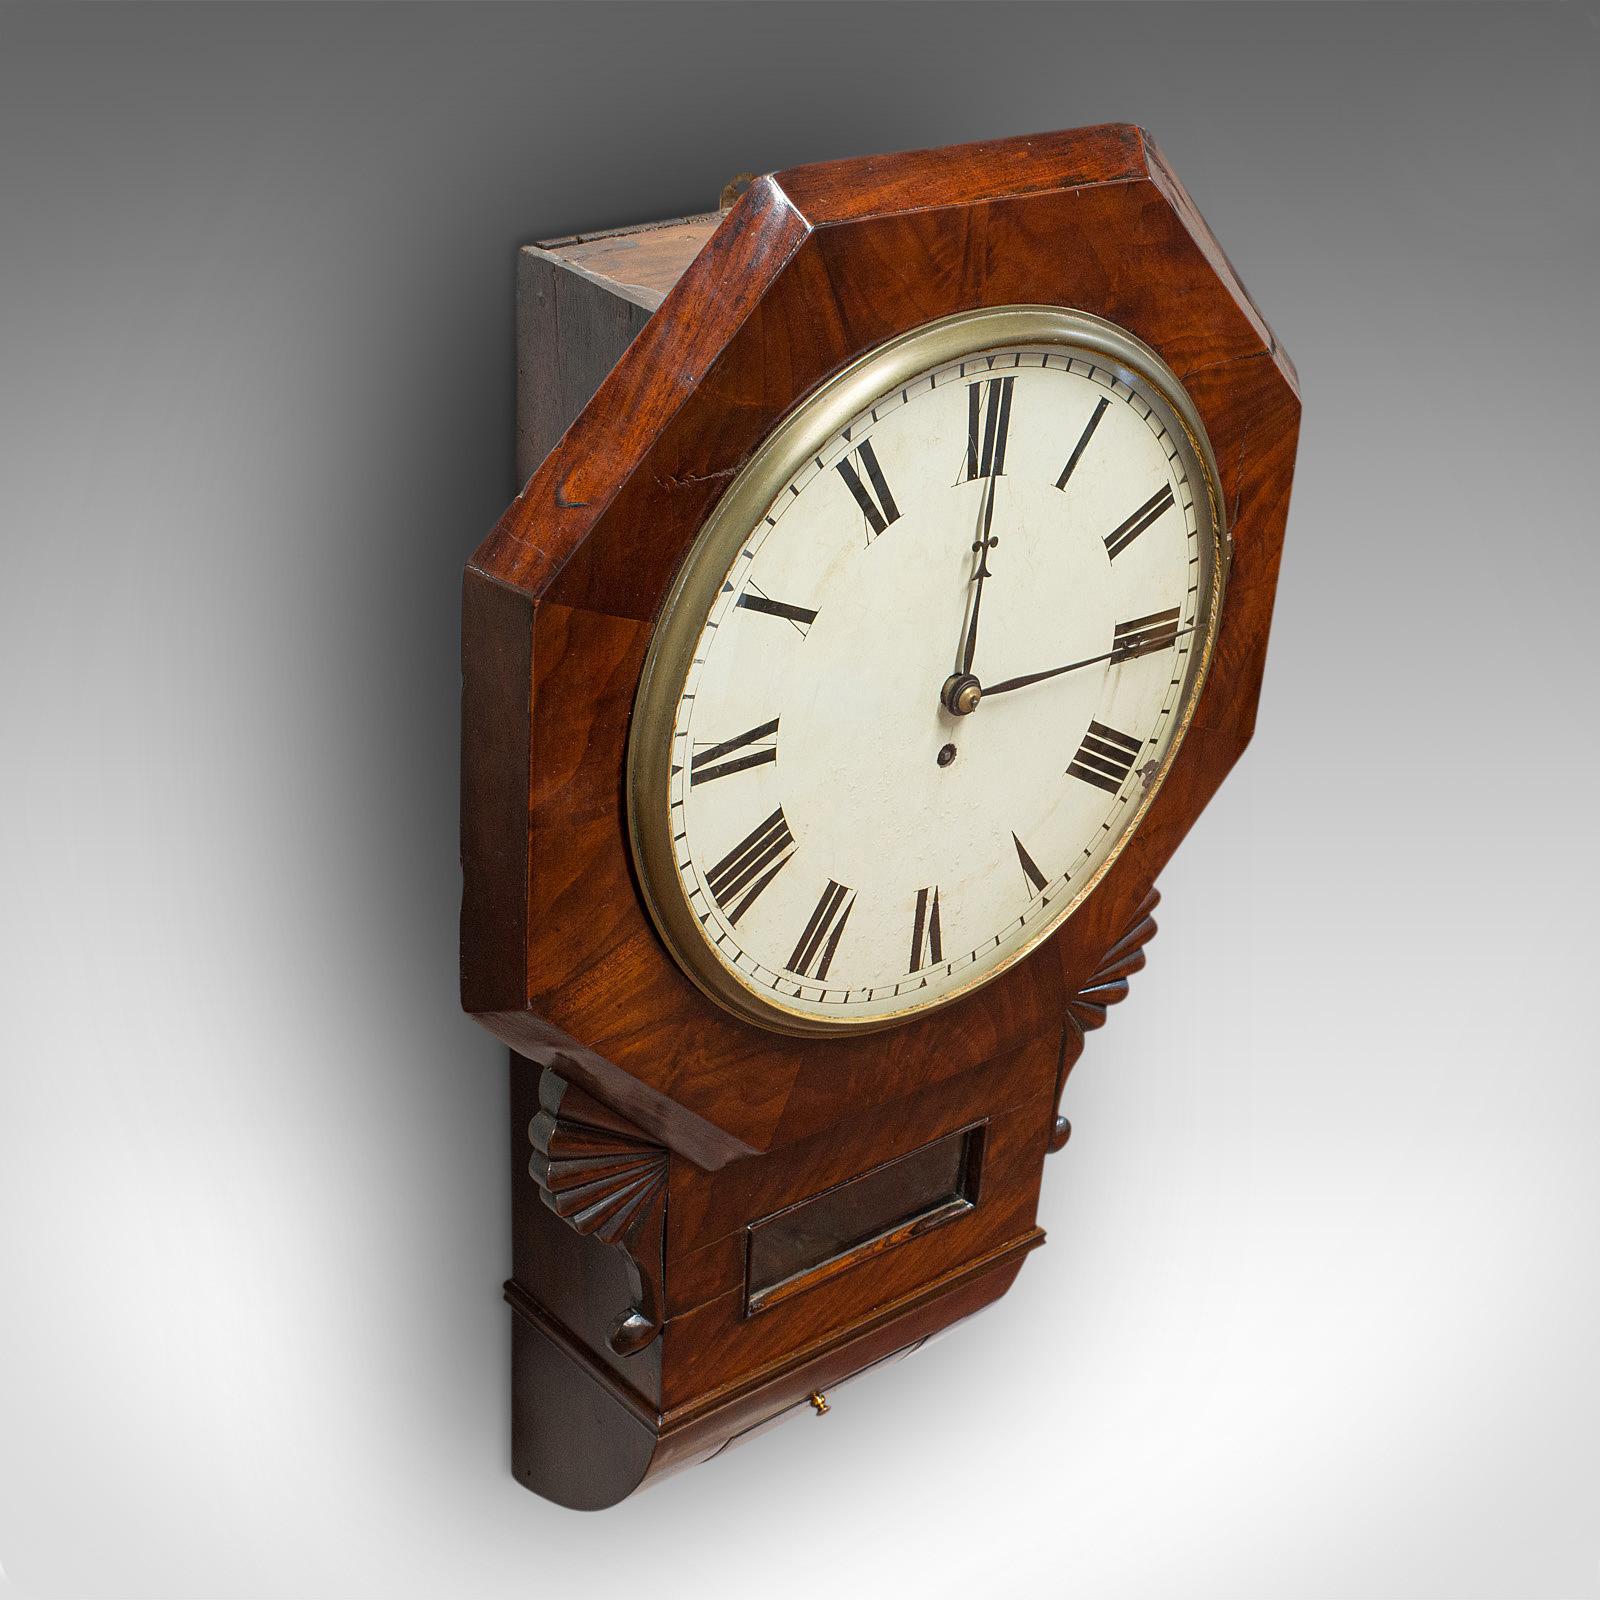 British Antique Drop Dial Wall Clock, English, Timepiece, Fusee, Victorian, circa 1870